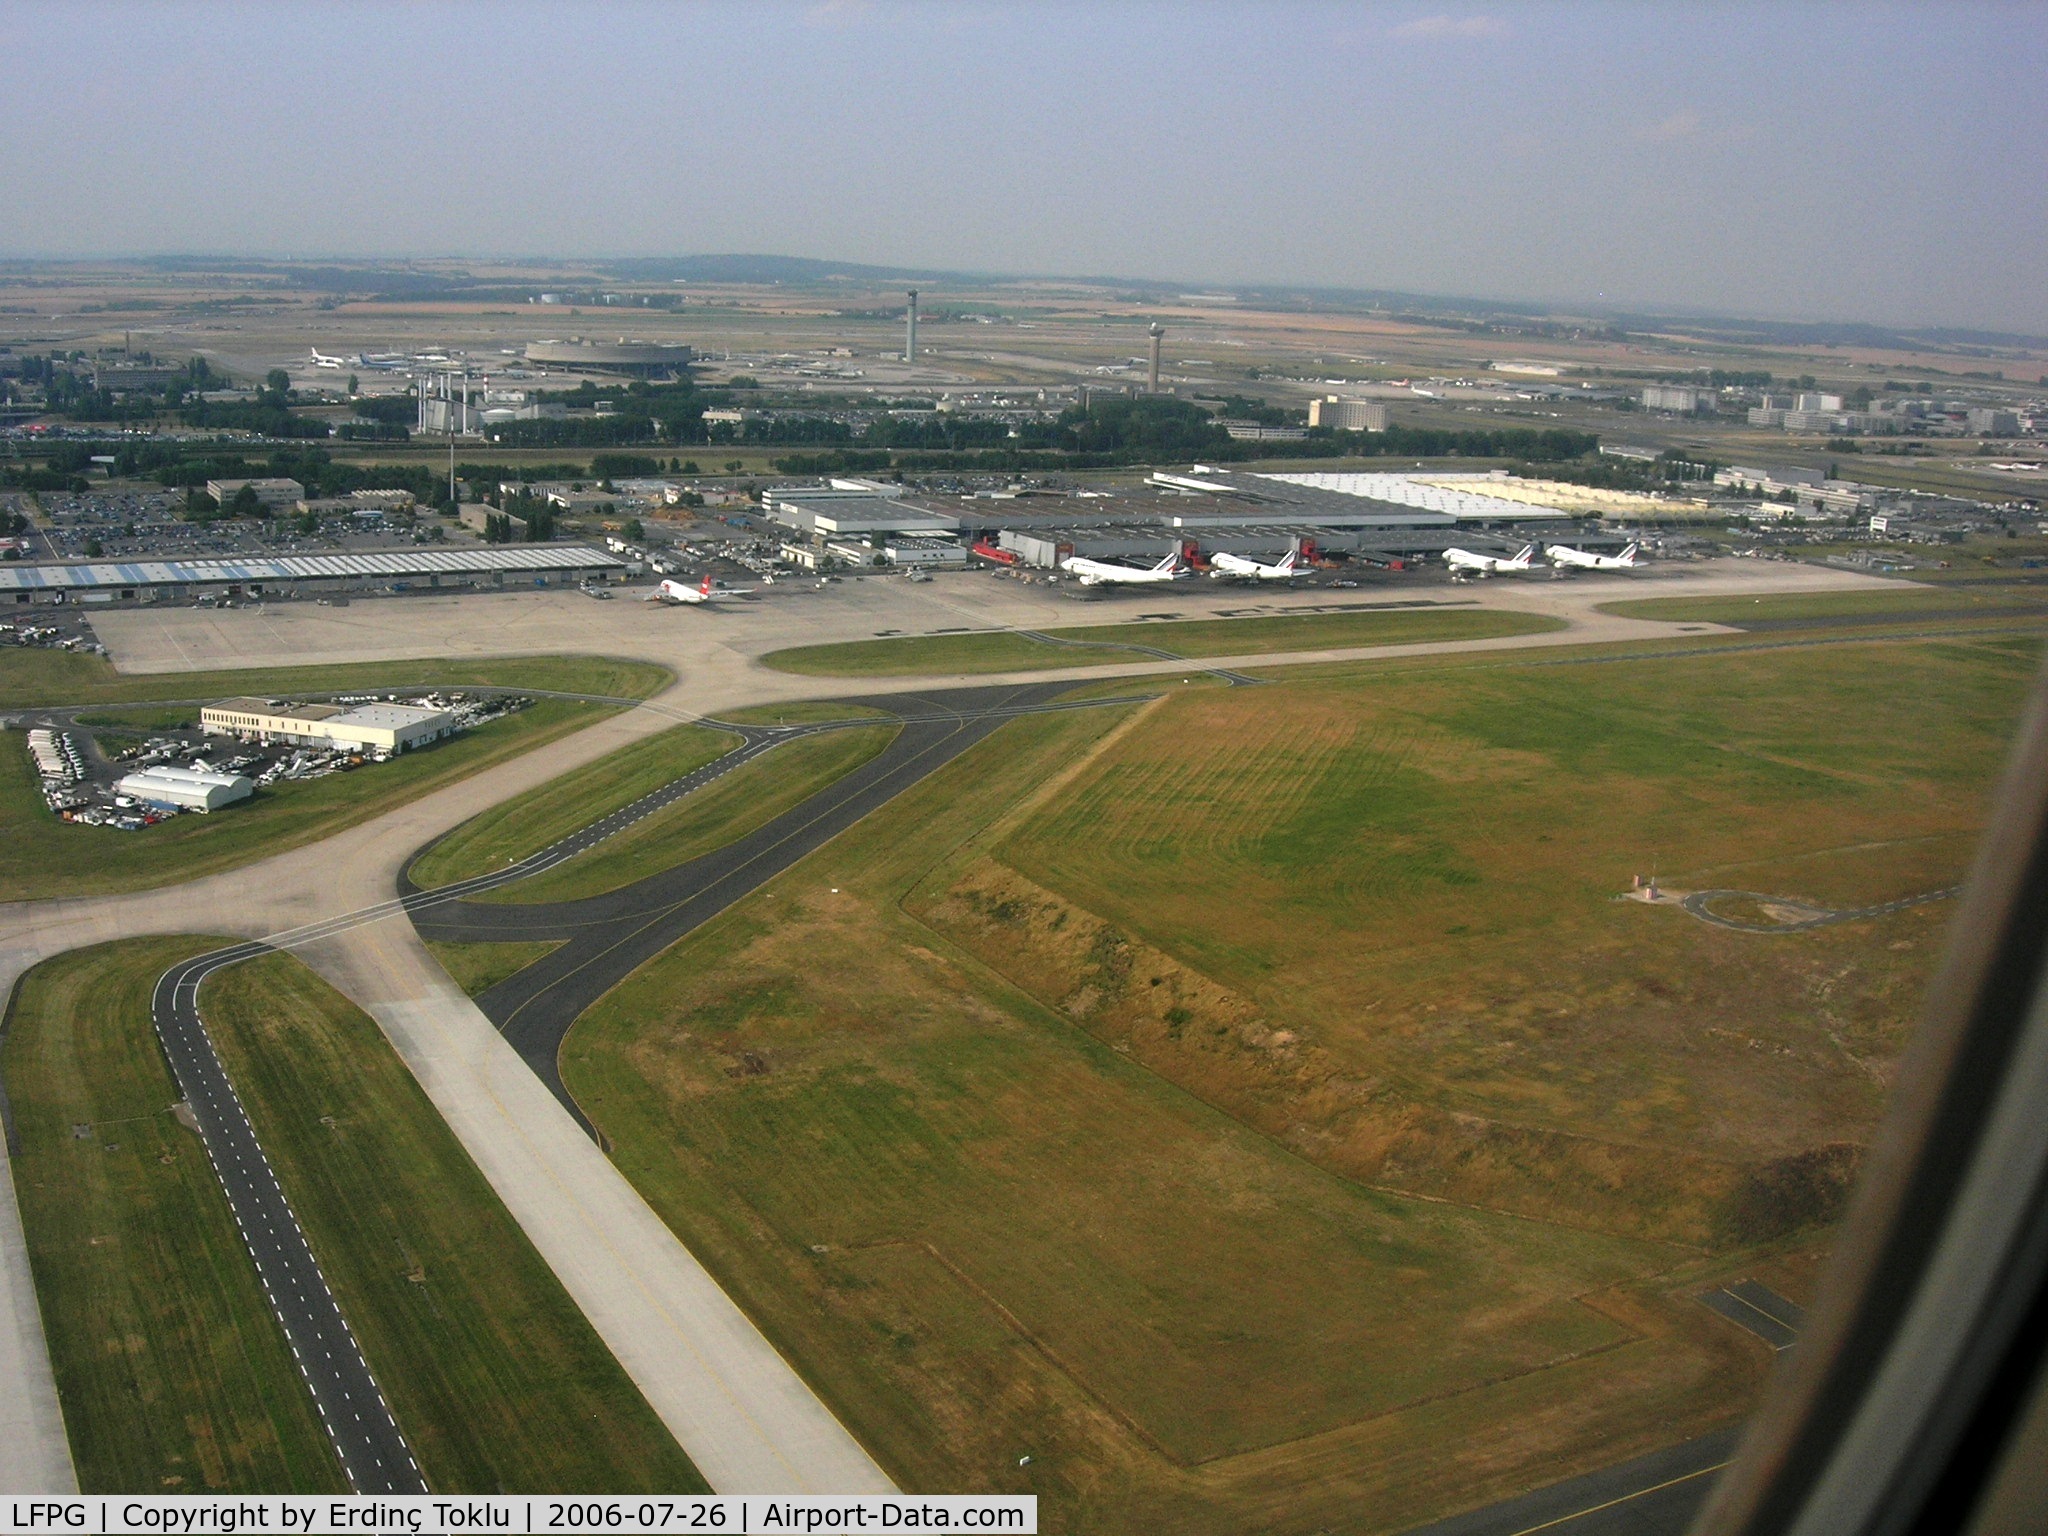 Paris Charles de Gaulle Airport (Roissy Airport), Paris France (LFPG) - On short final Rwy 08R at CDG-Maintenance area